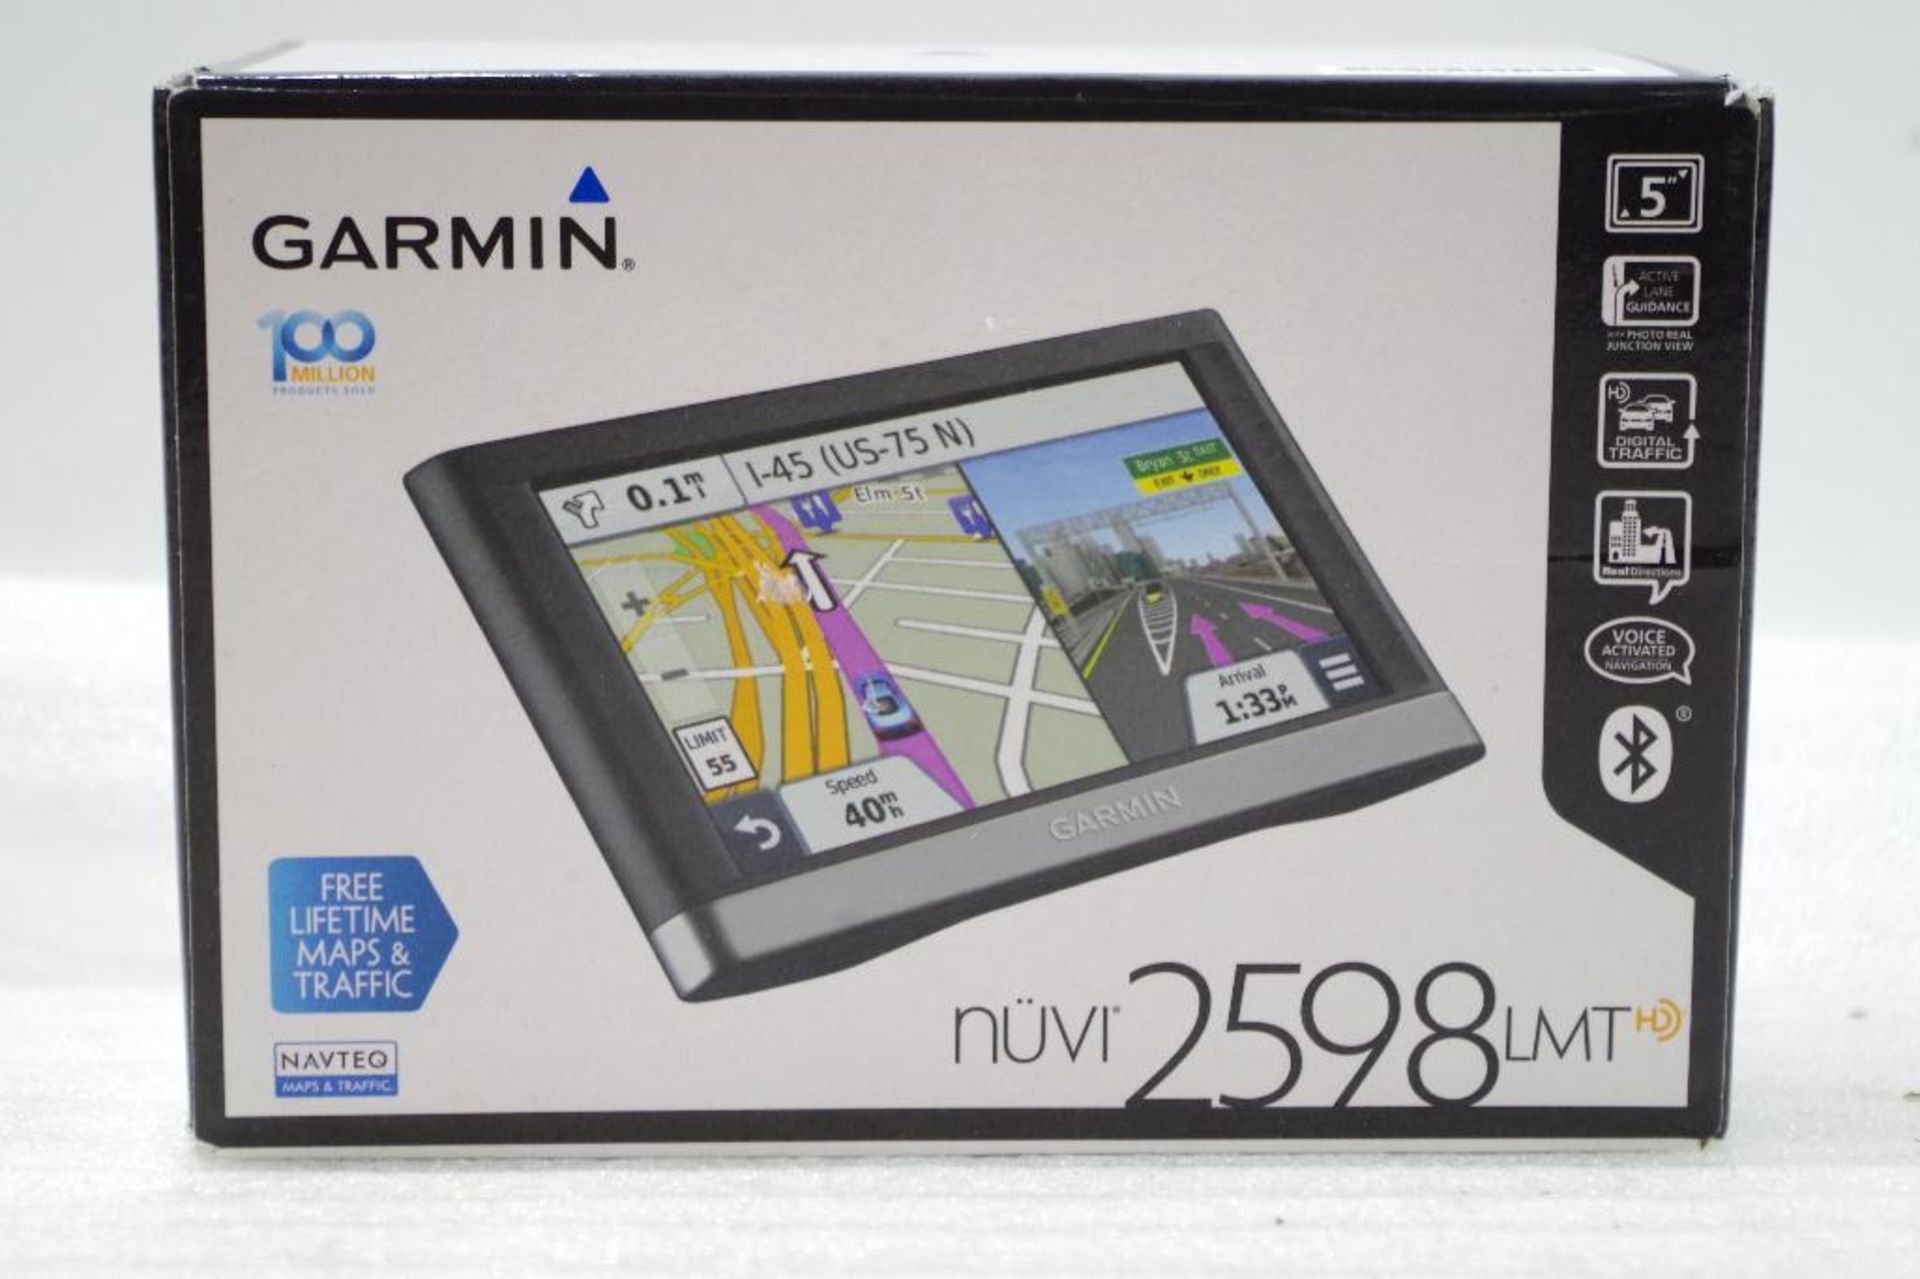 GARMIN Nuvi 2598 GPS Navigation System w/ Free Lifetime Maps & Traffic